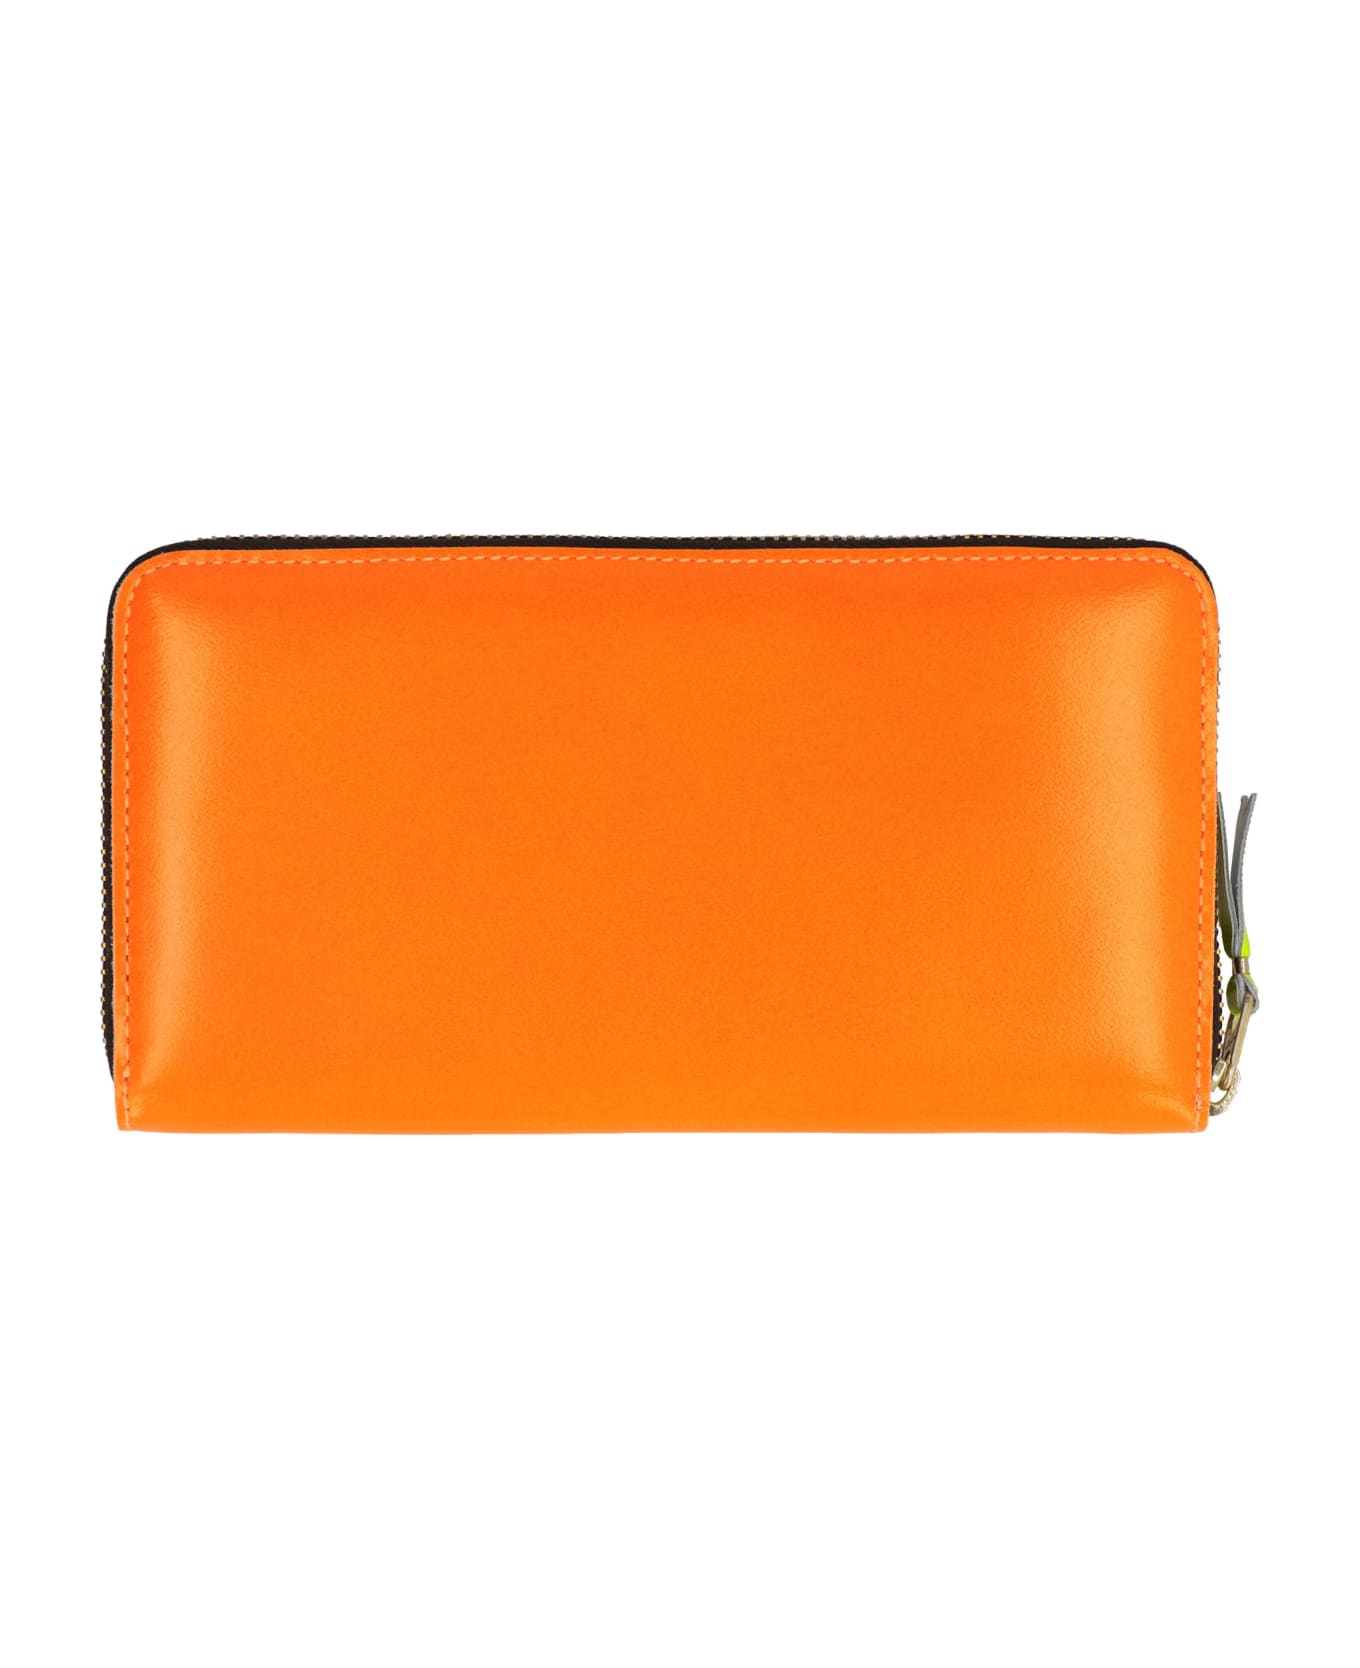 Comme des Garçons Wallet Leather Zip Around Wallet - Orange